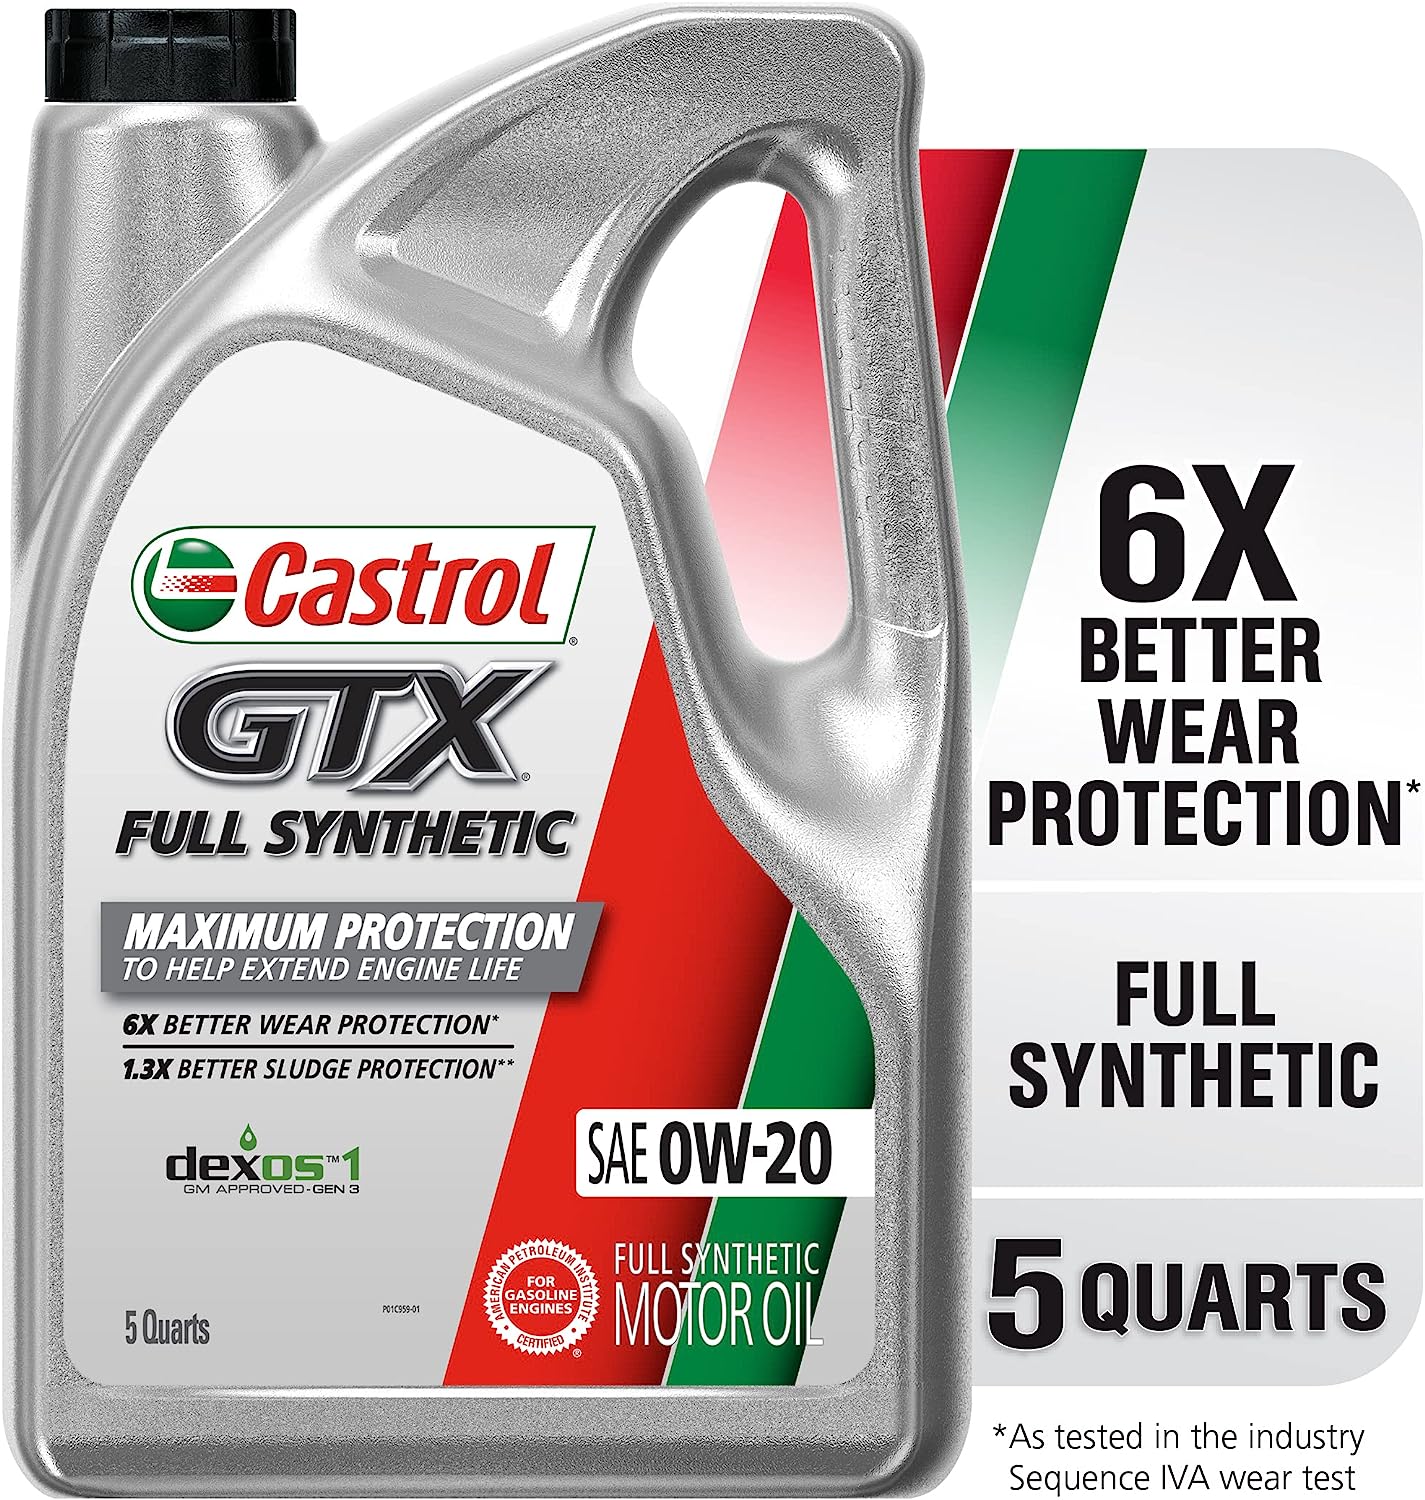 Castrol 15E725 GTX Full Synthetic 0W-20 Motor Oil, 5 Quarts